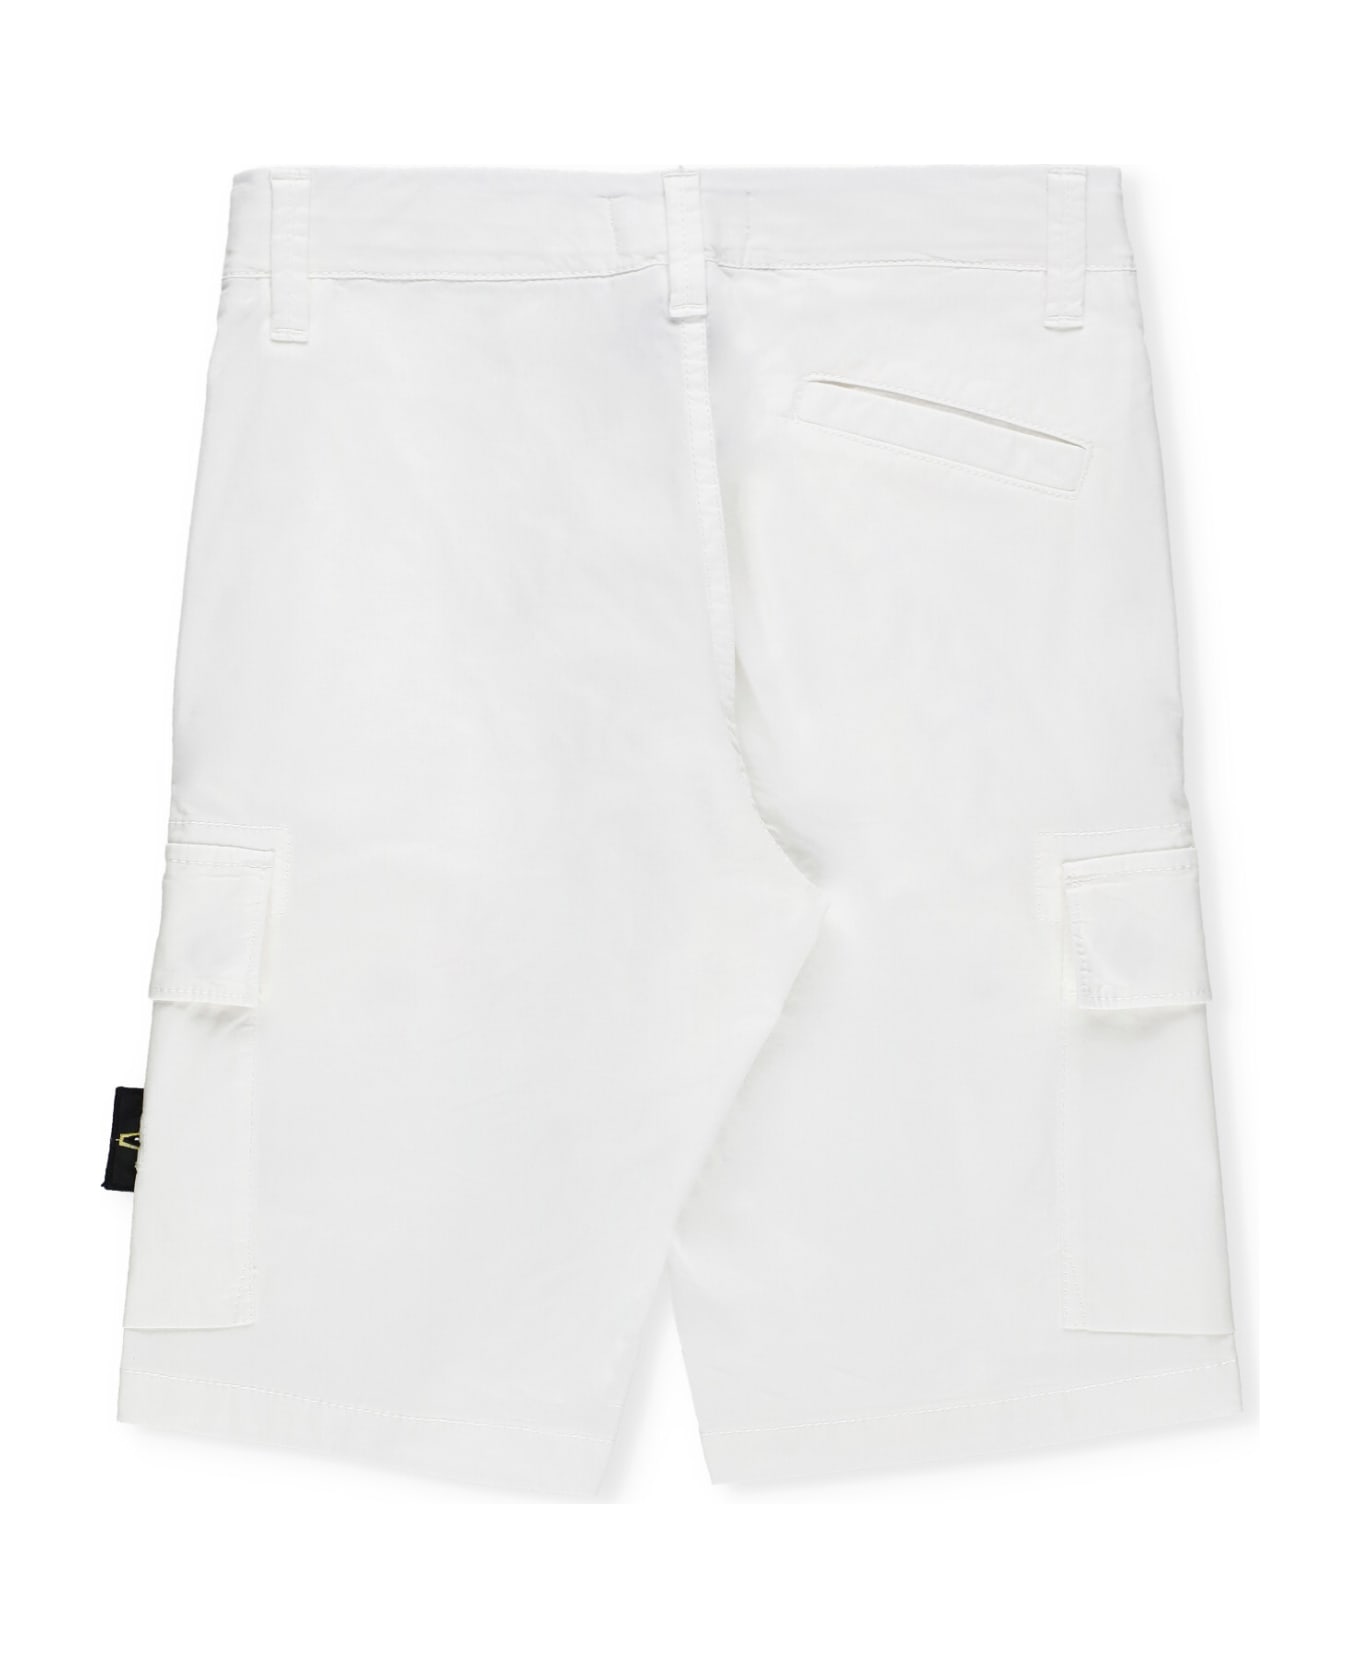 Stone Island Cotton Bermuda Shorts - White ボトムス